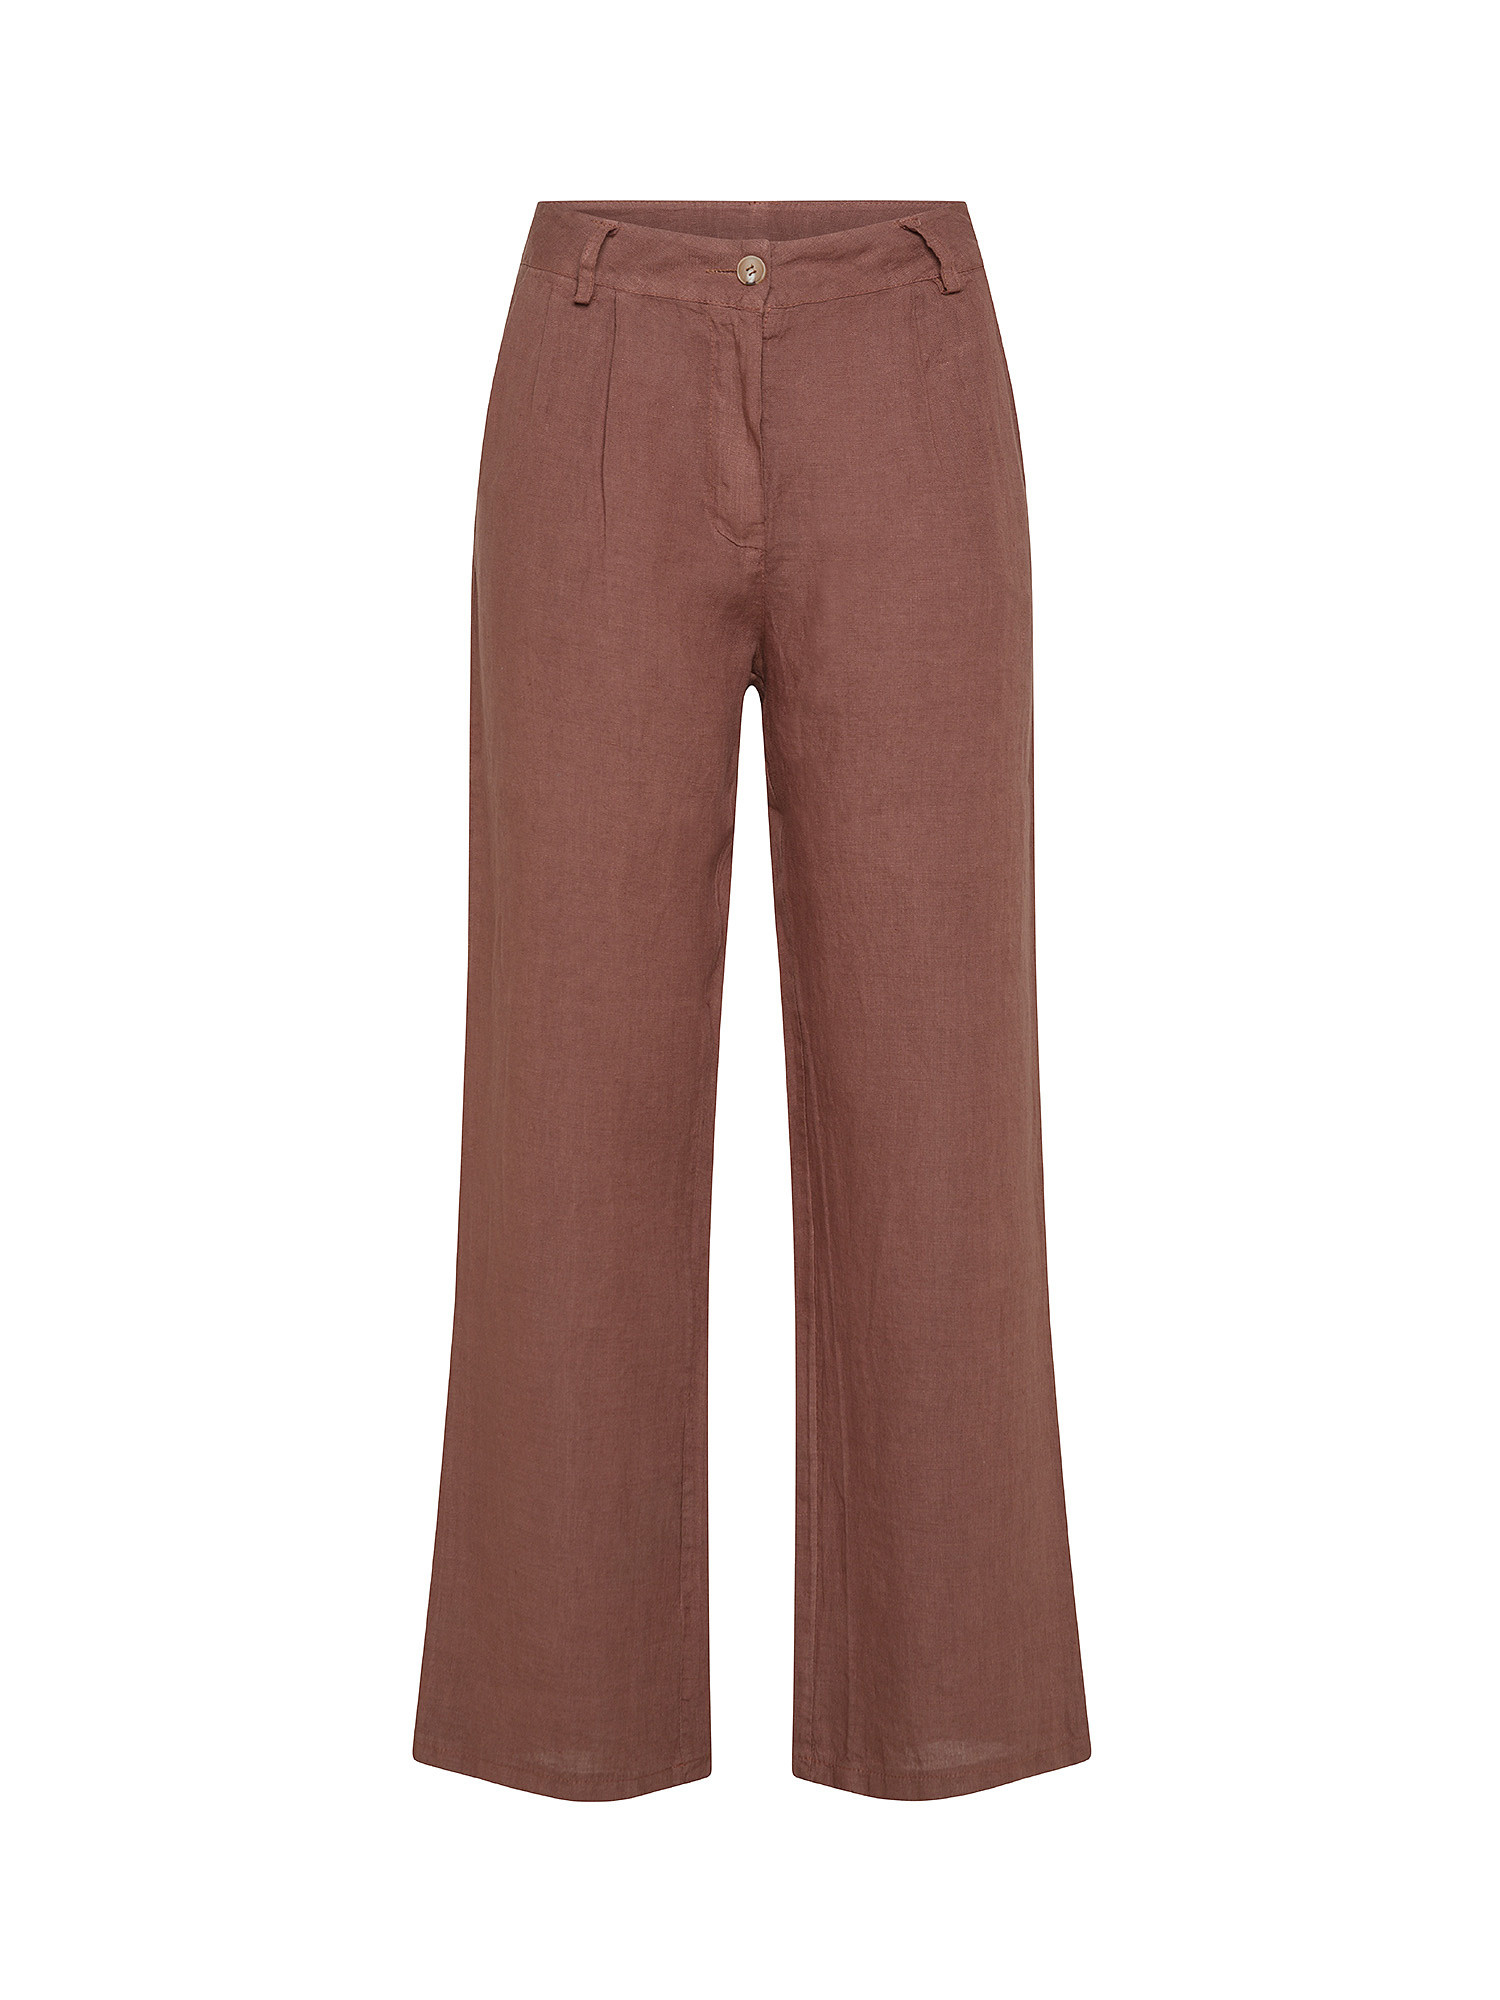 Koan - Pantaloni in lino con pinces, Marrone, large image number 0